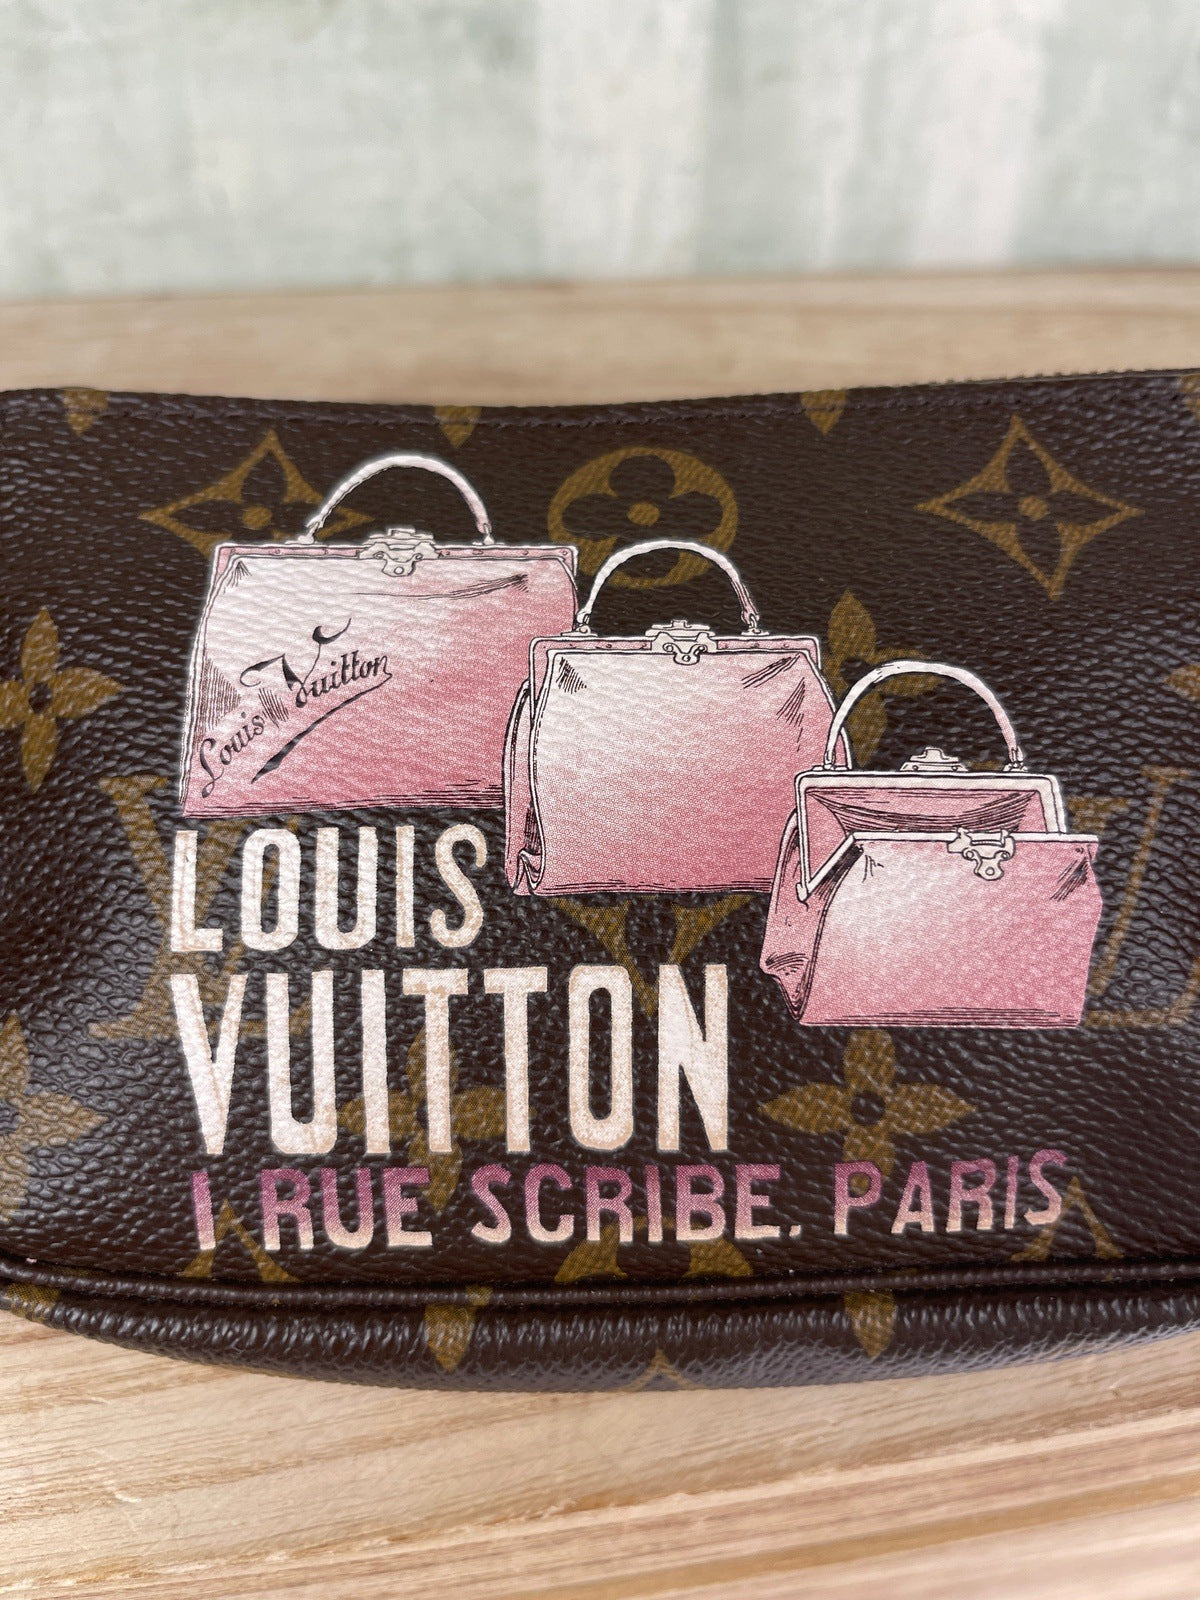 Louis Vuitton Monogram Canvas Tivoli PM - What Goes Around Comes Around